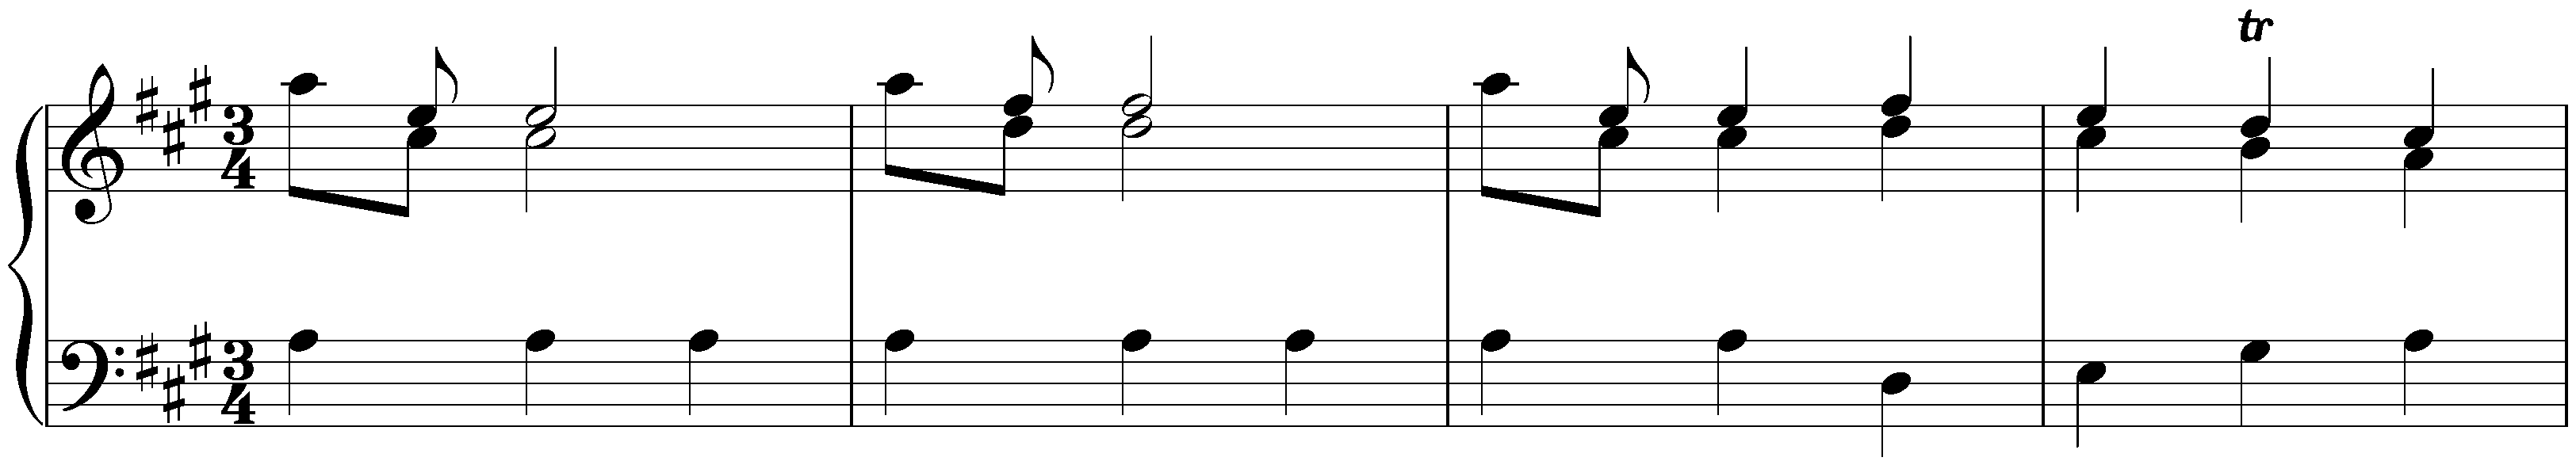 Sonata in A major, Hob. XVI:5; 2. Menuet – Trio